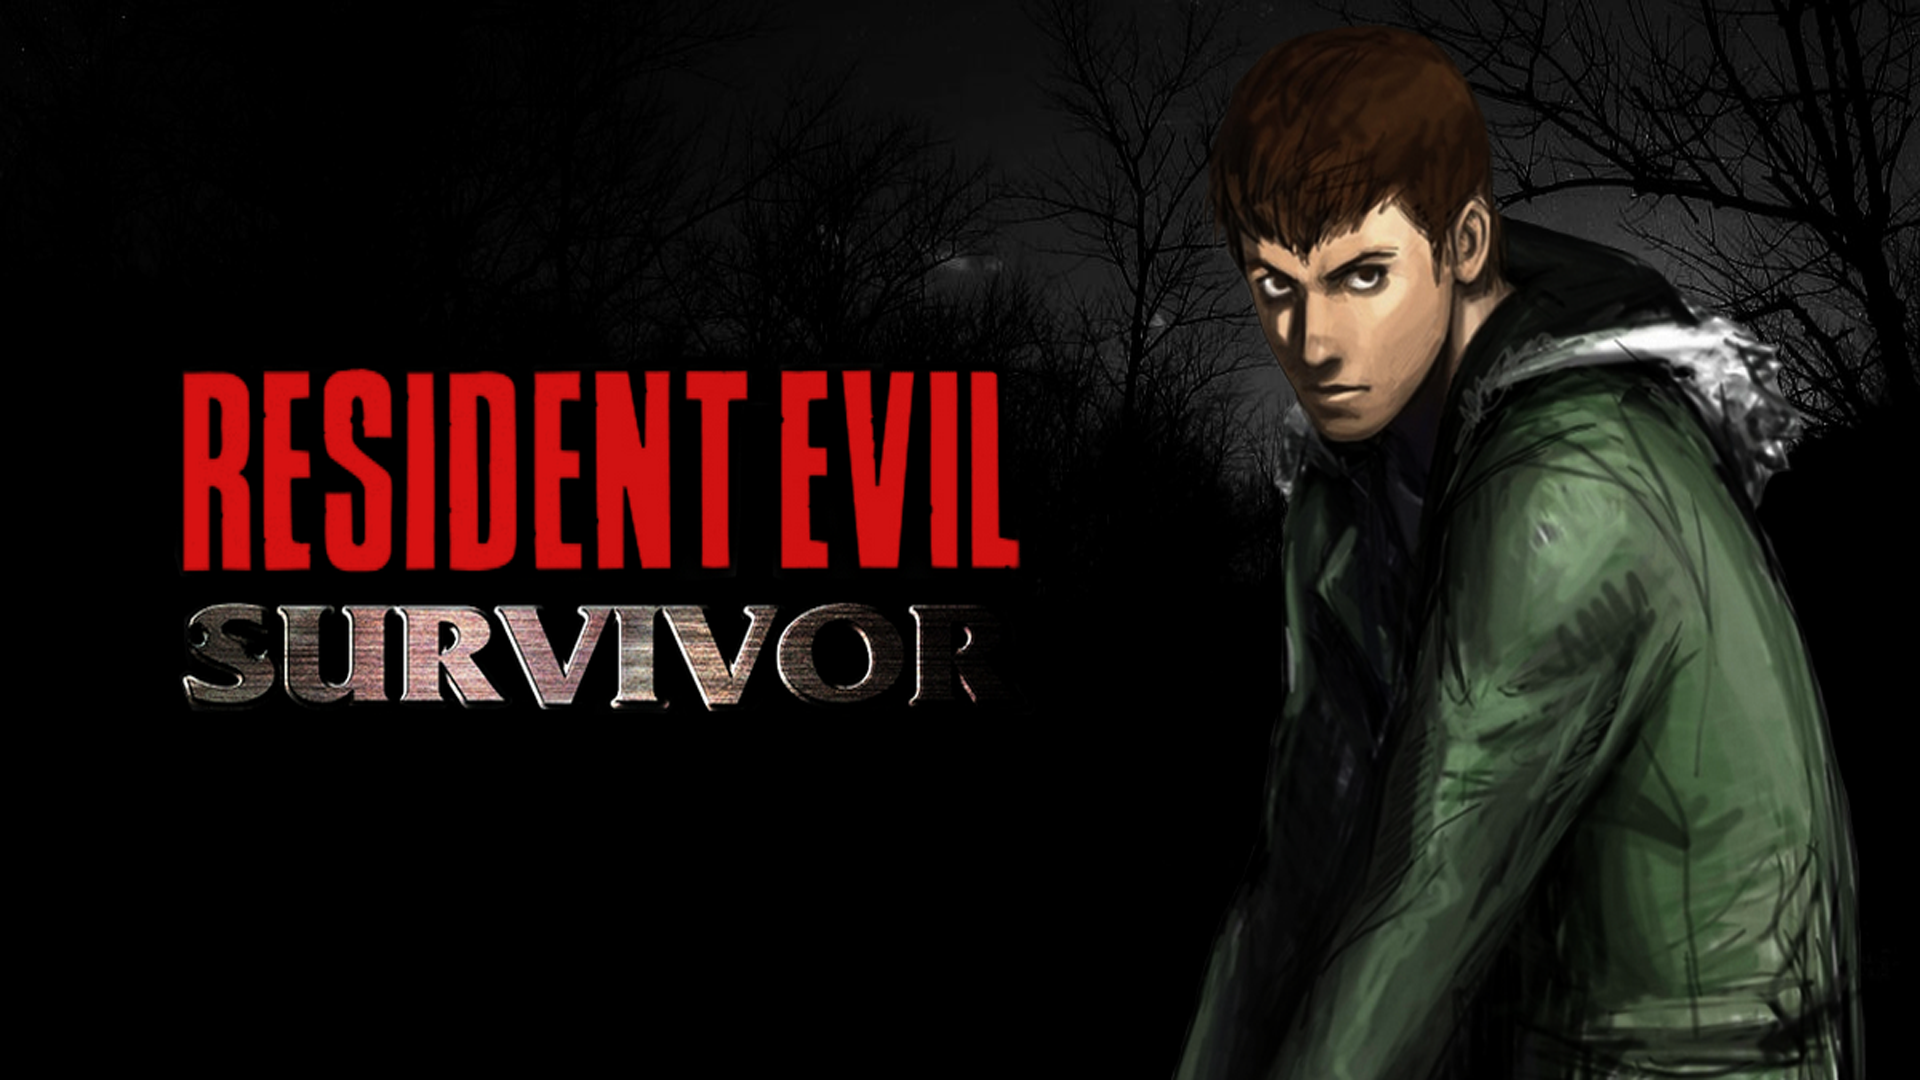 Let’s Play Resident Evil Survivor